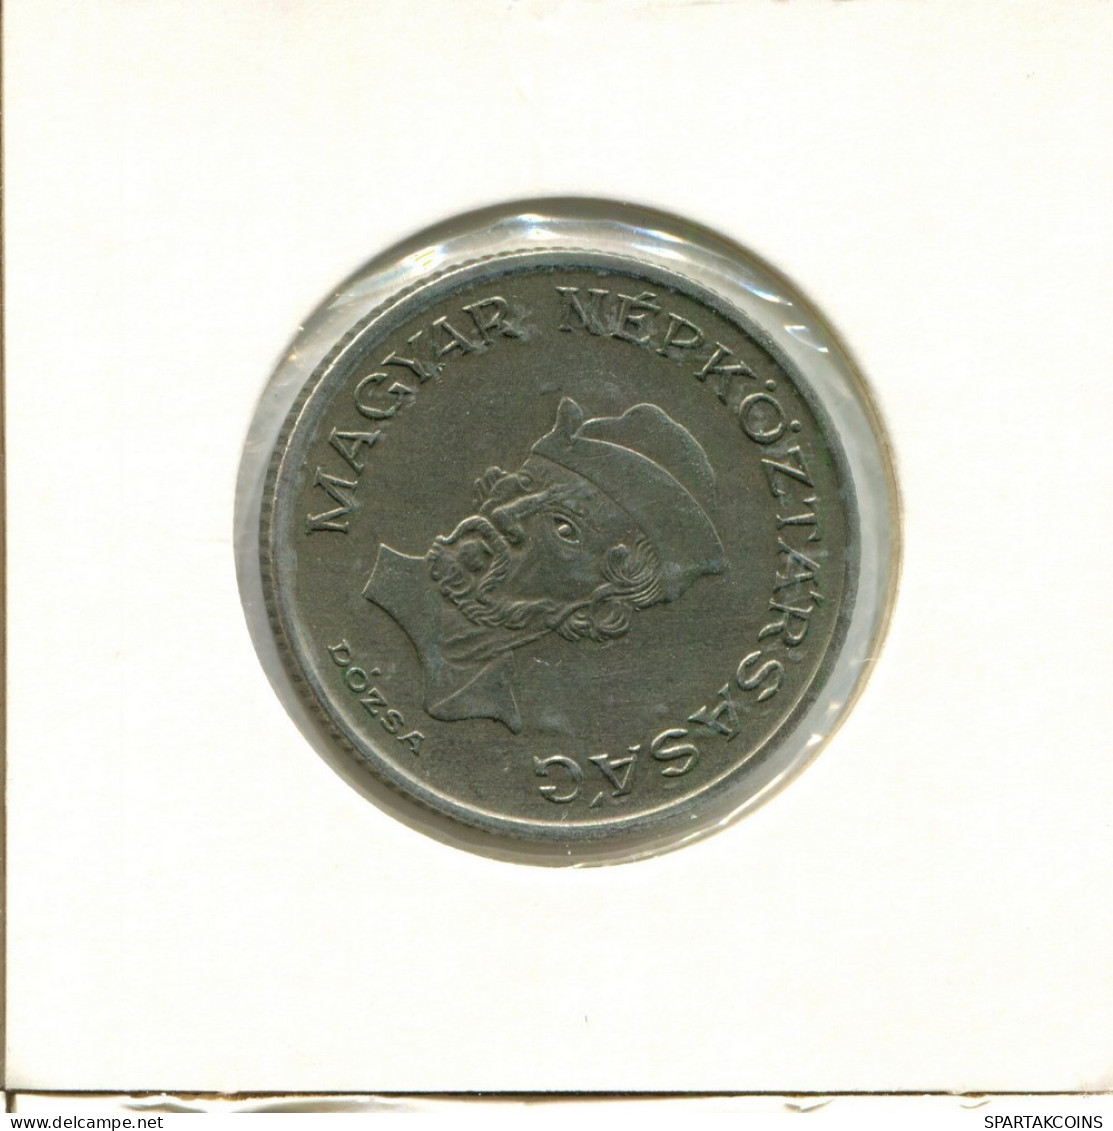 20 FORINT 1983 HUNGRÍA HUNGARY Moneda #AY529.E.A - Ungarn